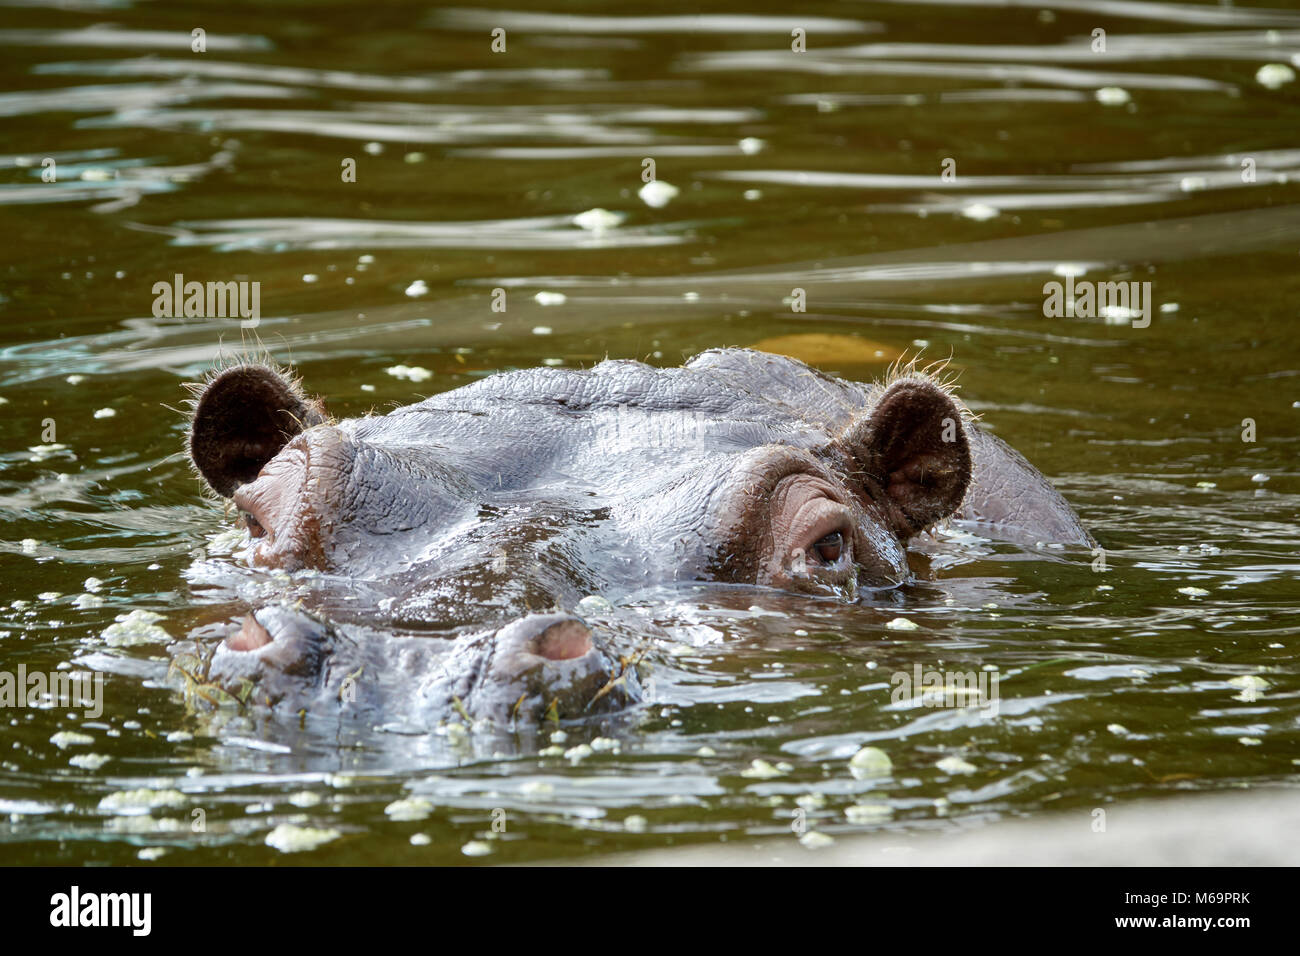 Muzzle of a hippopotamus in water closeup. Stock Photo